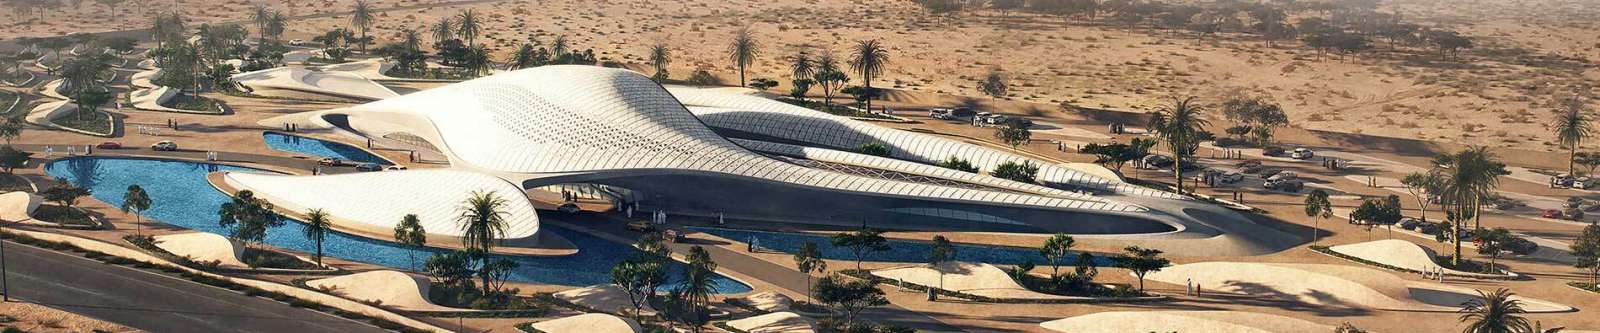 Polystorm_Beeah_Zaha_Hadid_Architects_Sharjah_Polypipe